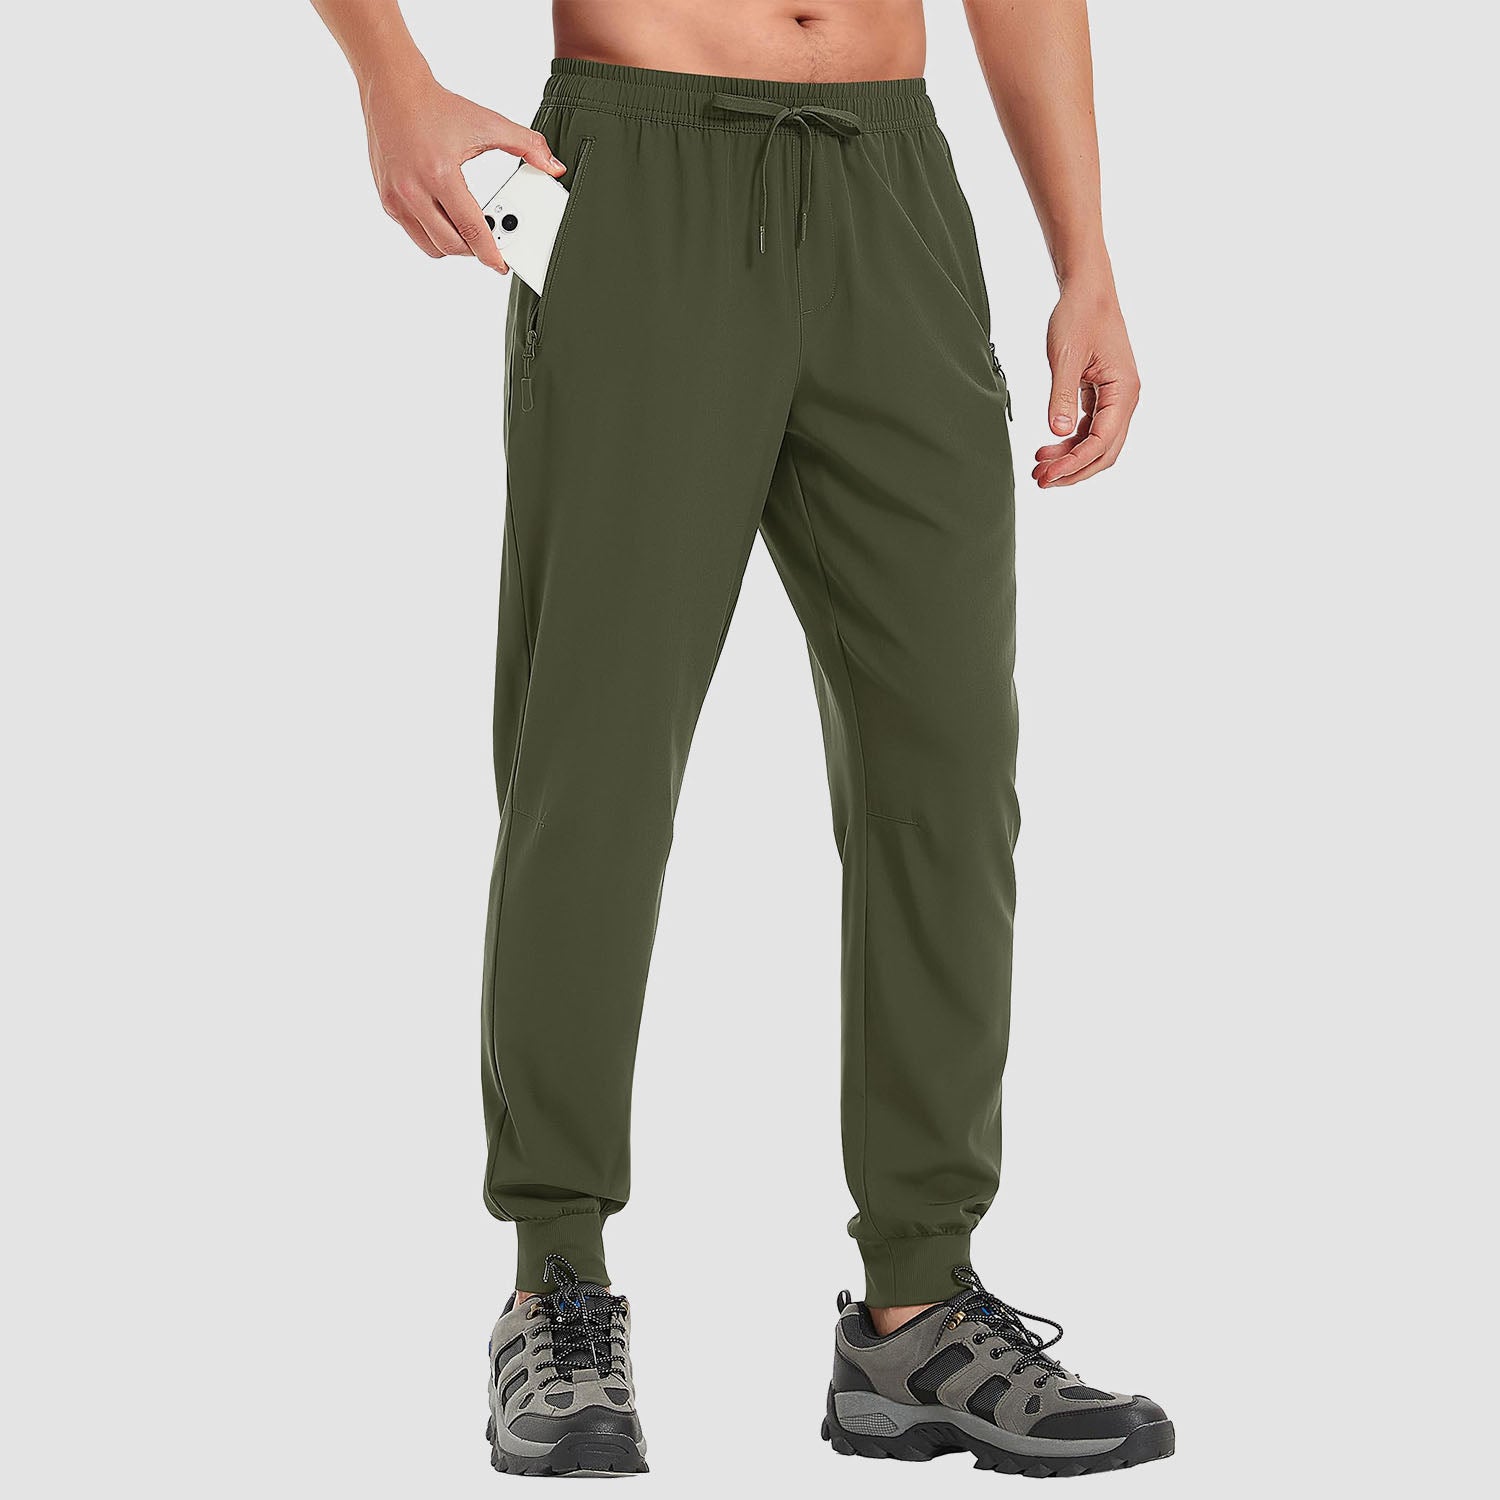 MAGCOMSEN Men's Sweatpants Lightweight Quick Dry Workout Trousers, Orange / 40